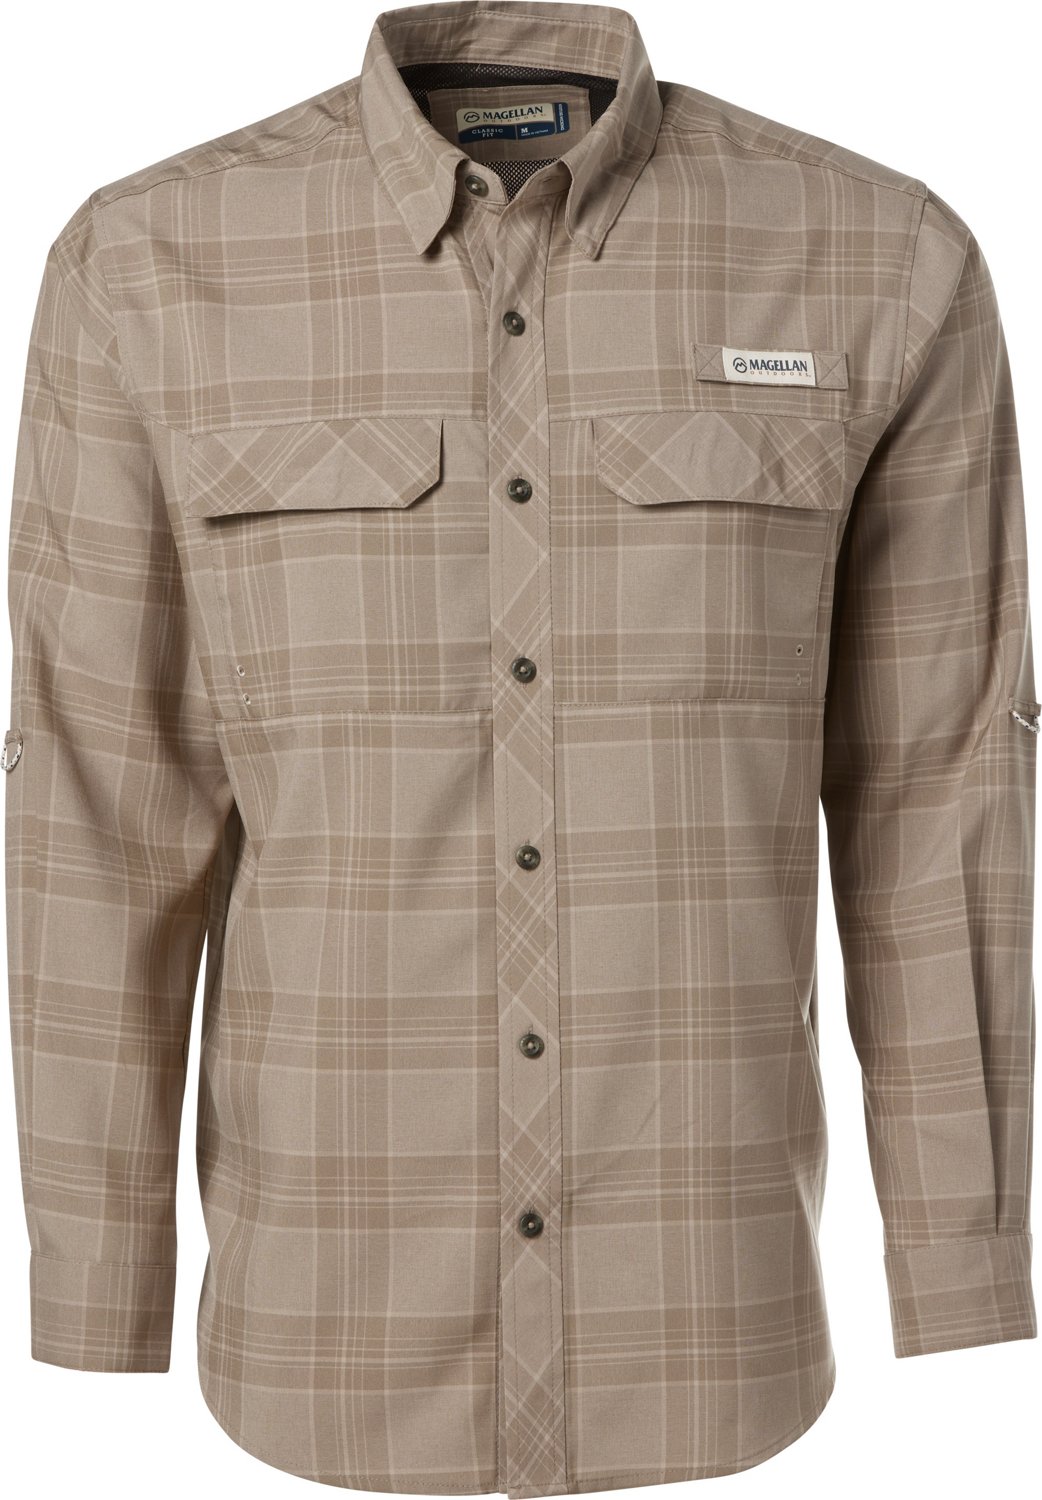 Magellan Outdoors Men's Barton Creek Outdoor Plaid Long Sleeve Shirt